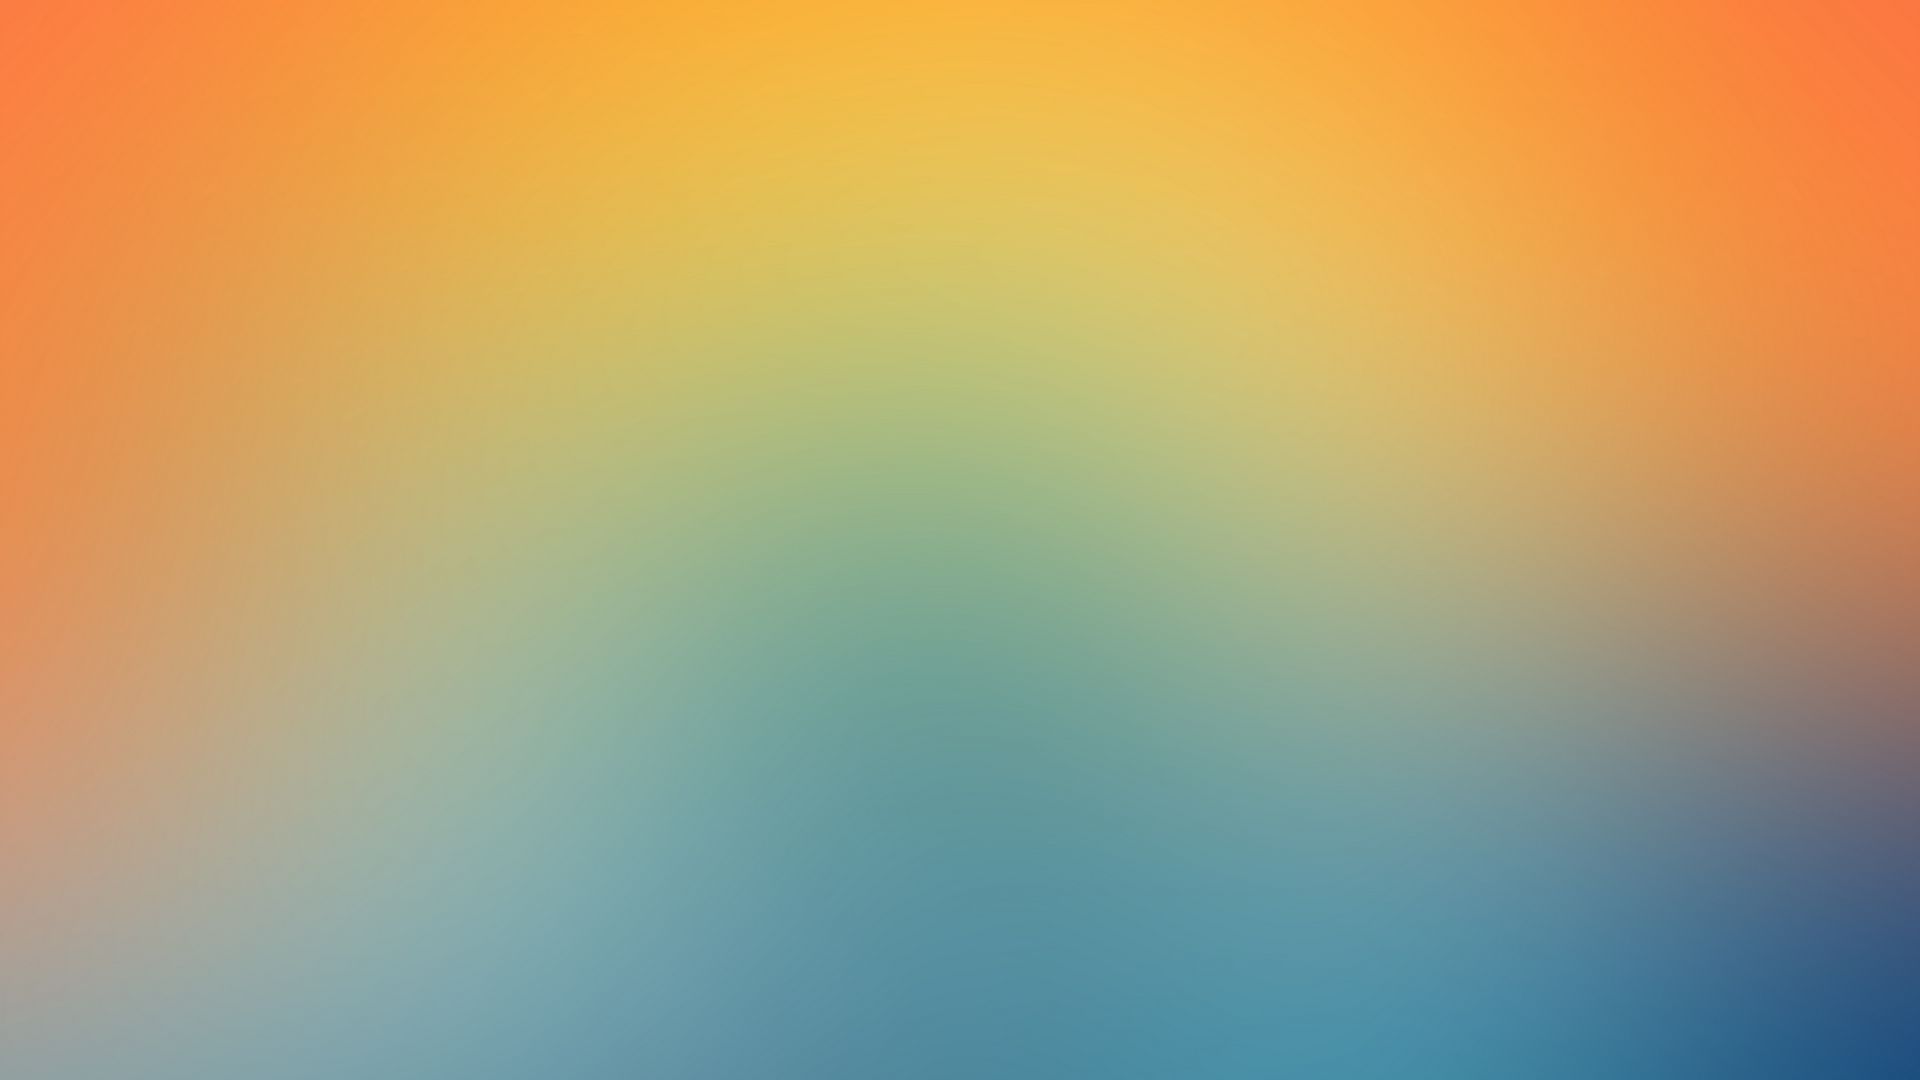 Download wallpaper 1920x1080 gradient, blur, blending, yellow, blue, soft full hd, hdtv, fhd, 1080p HD background